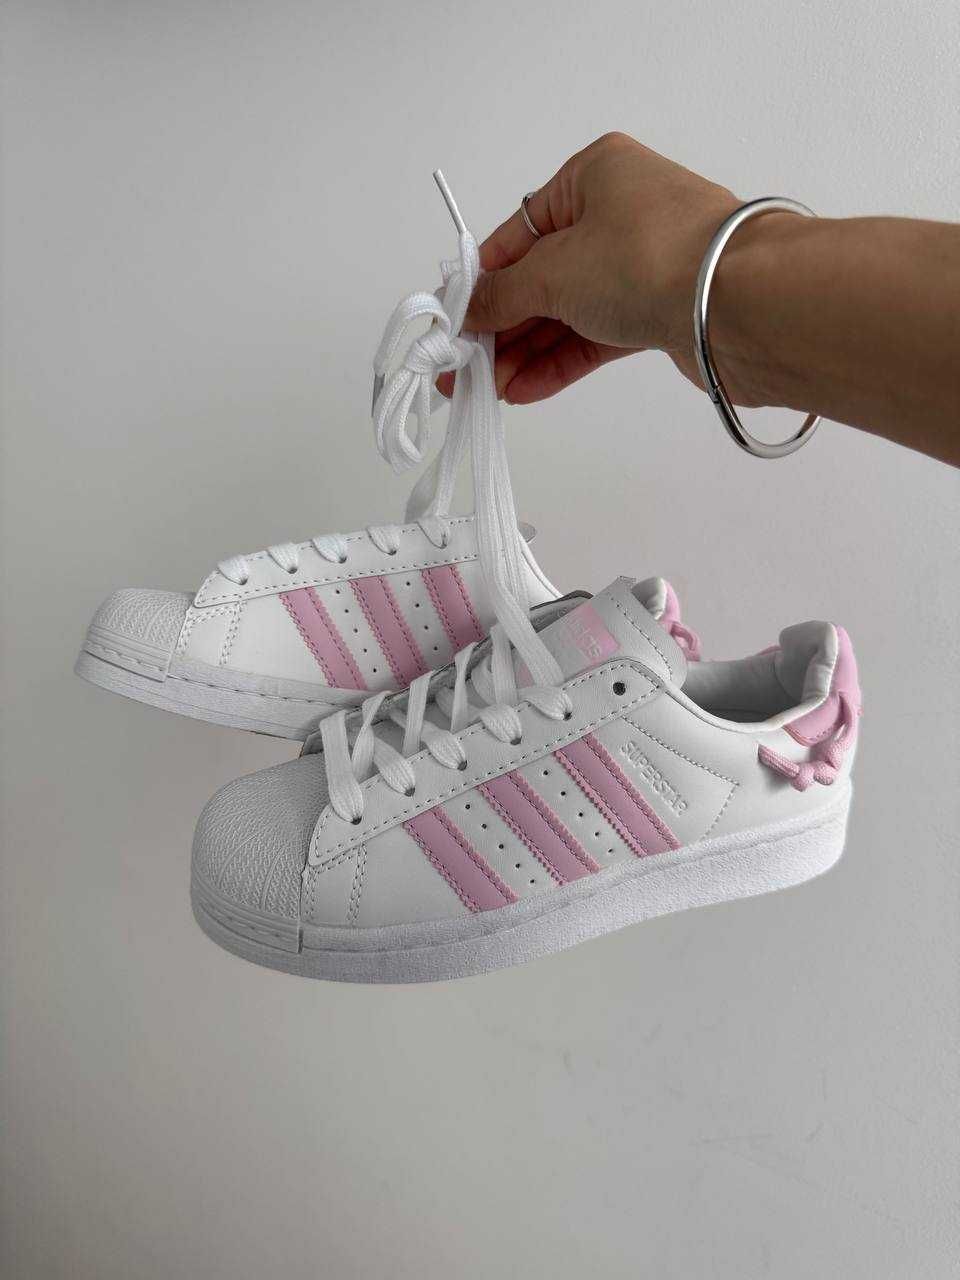 Женские кроссовки Adidas Superstar Knotted Rope White Pink 36-41 Хит!